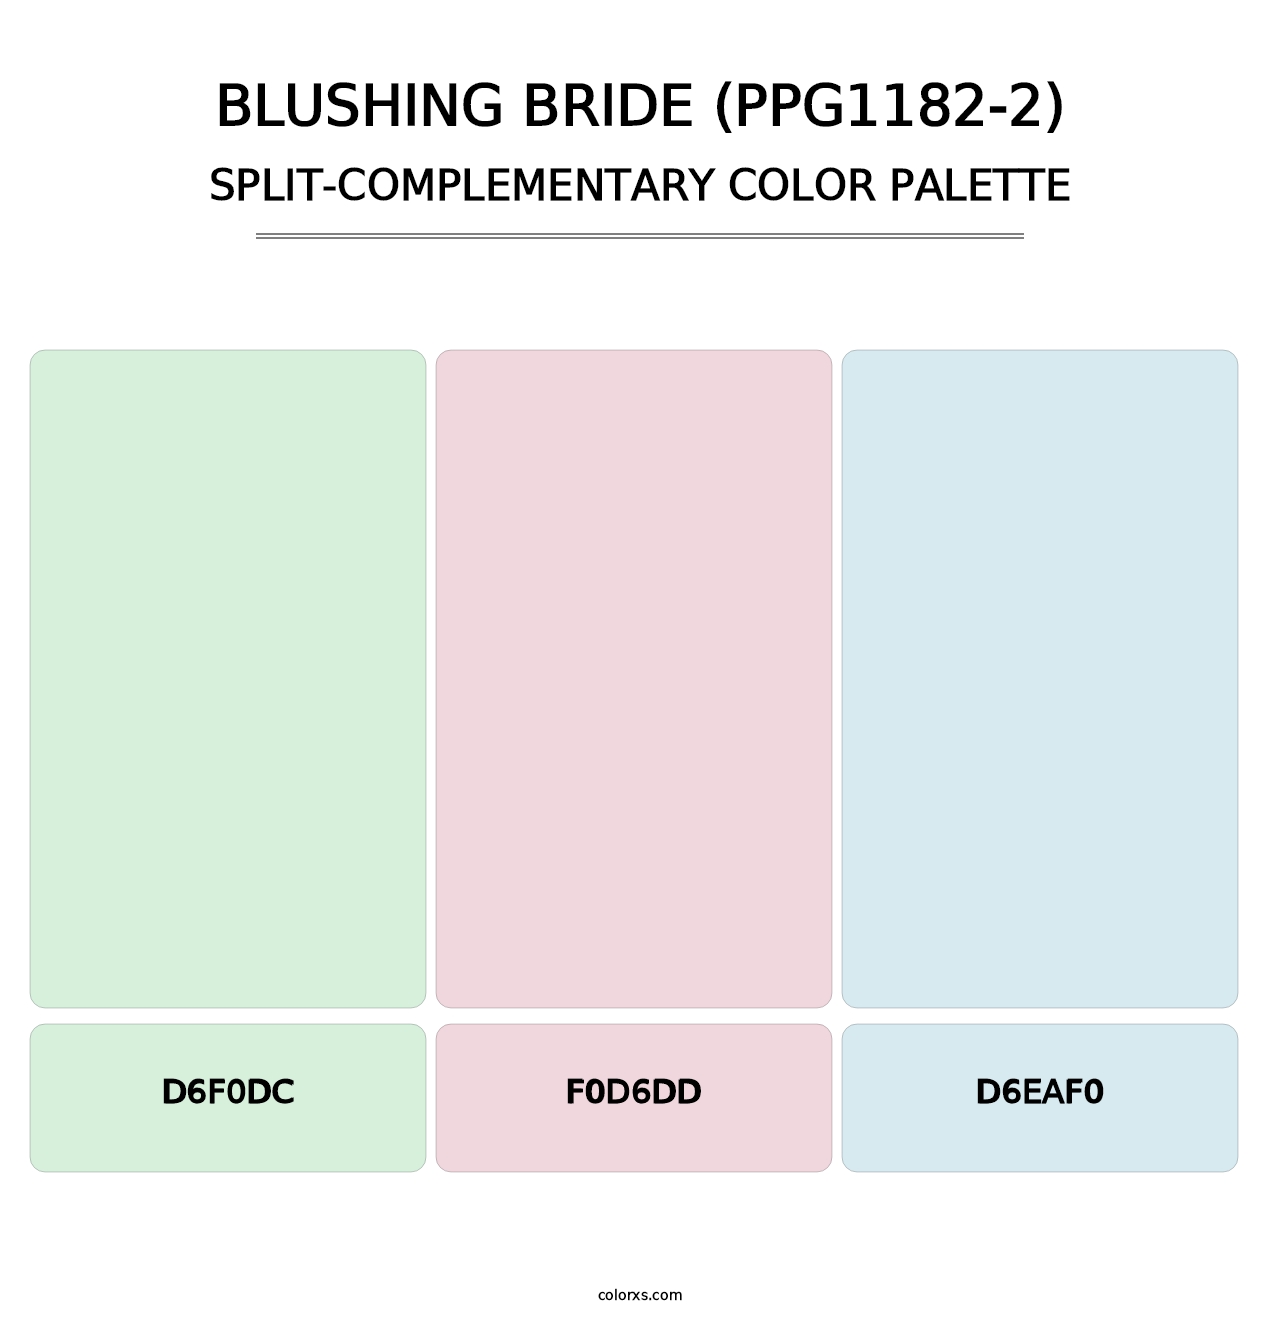 Blushing Bride (PPG1182-2) - Split-Complementary Color Palette